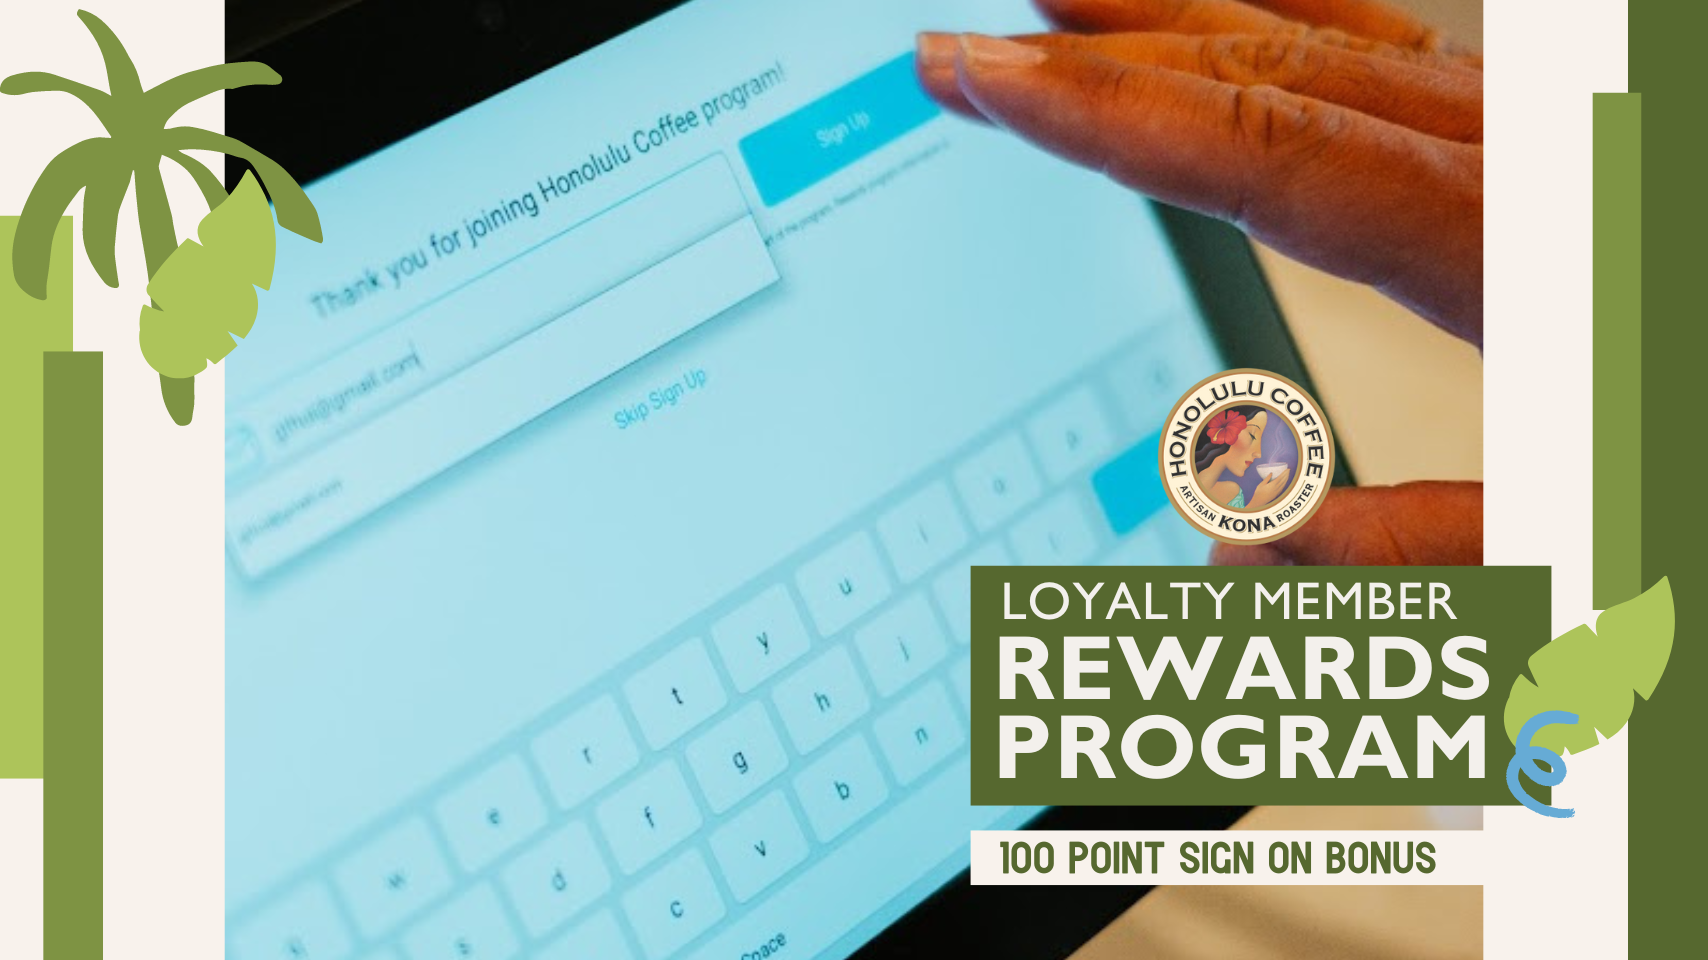 LOYALTY MEMBER REWARDS PROGRAM. 100 POINT SIGN ON BONUS